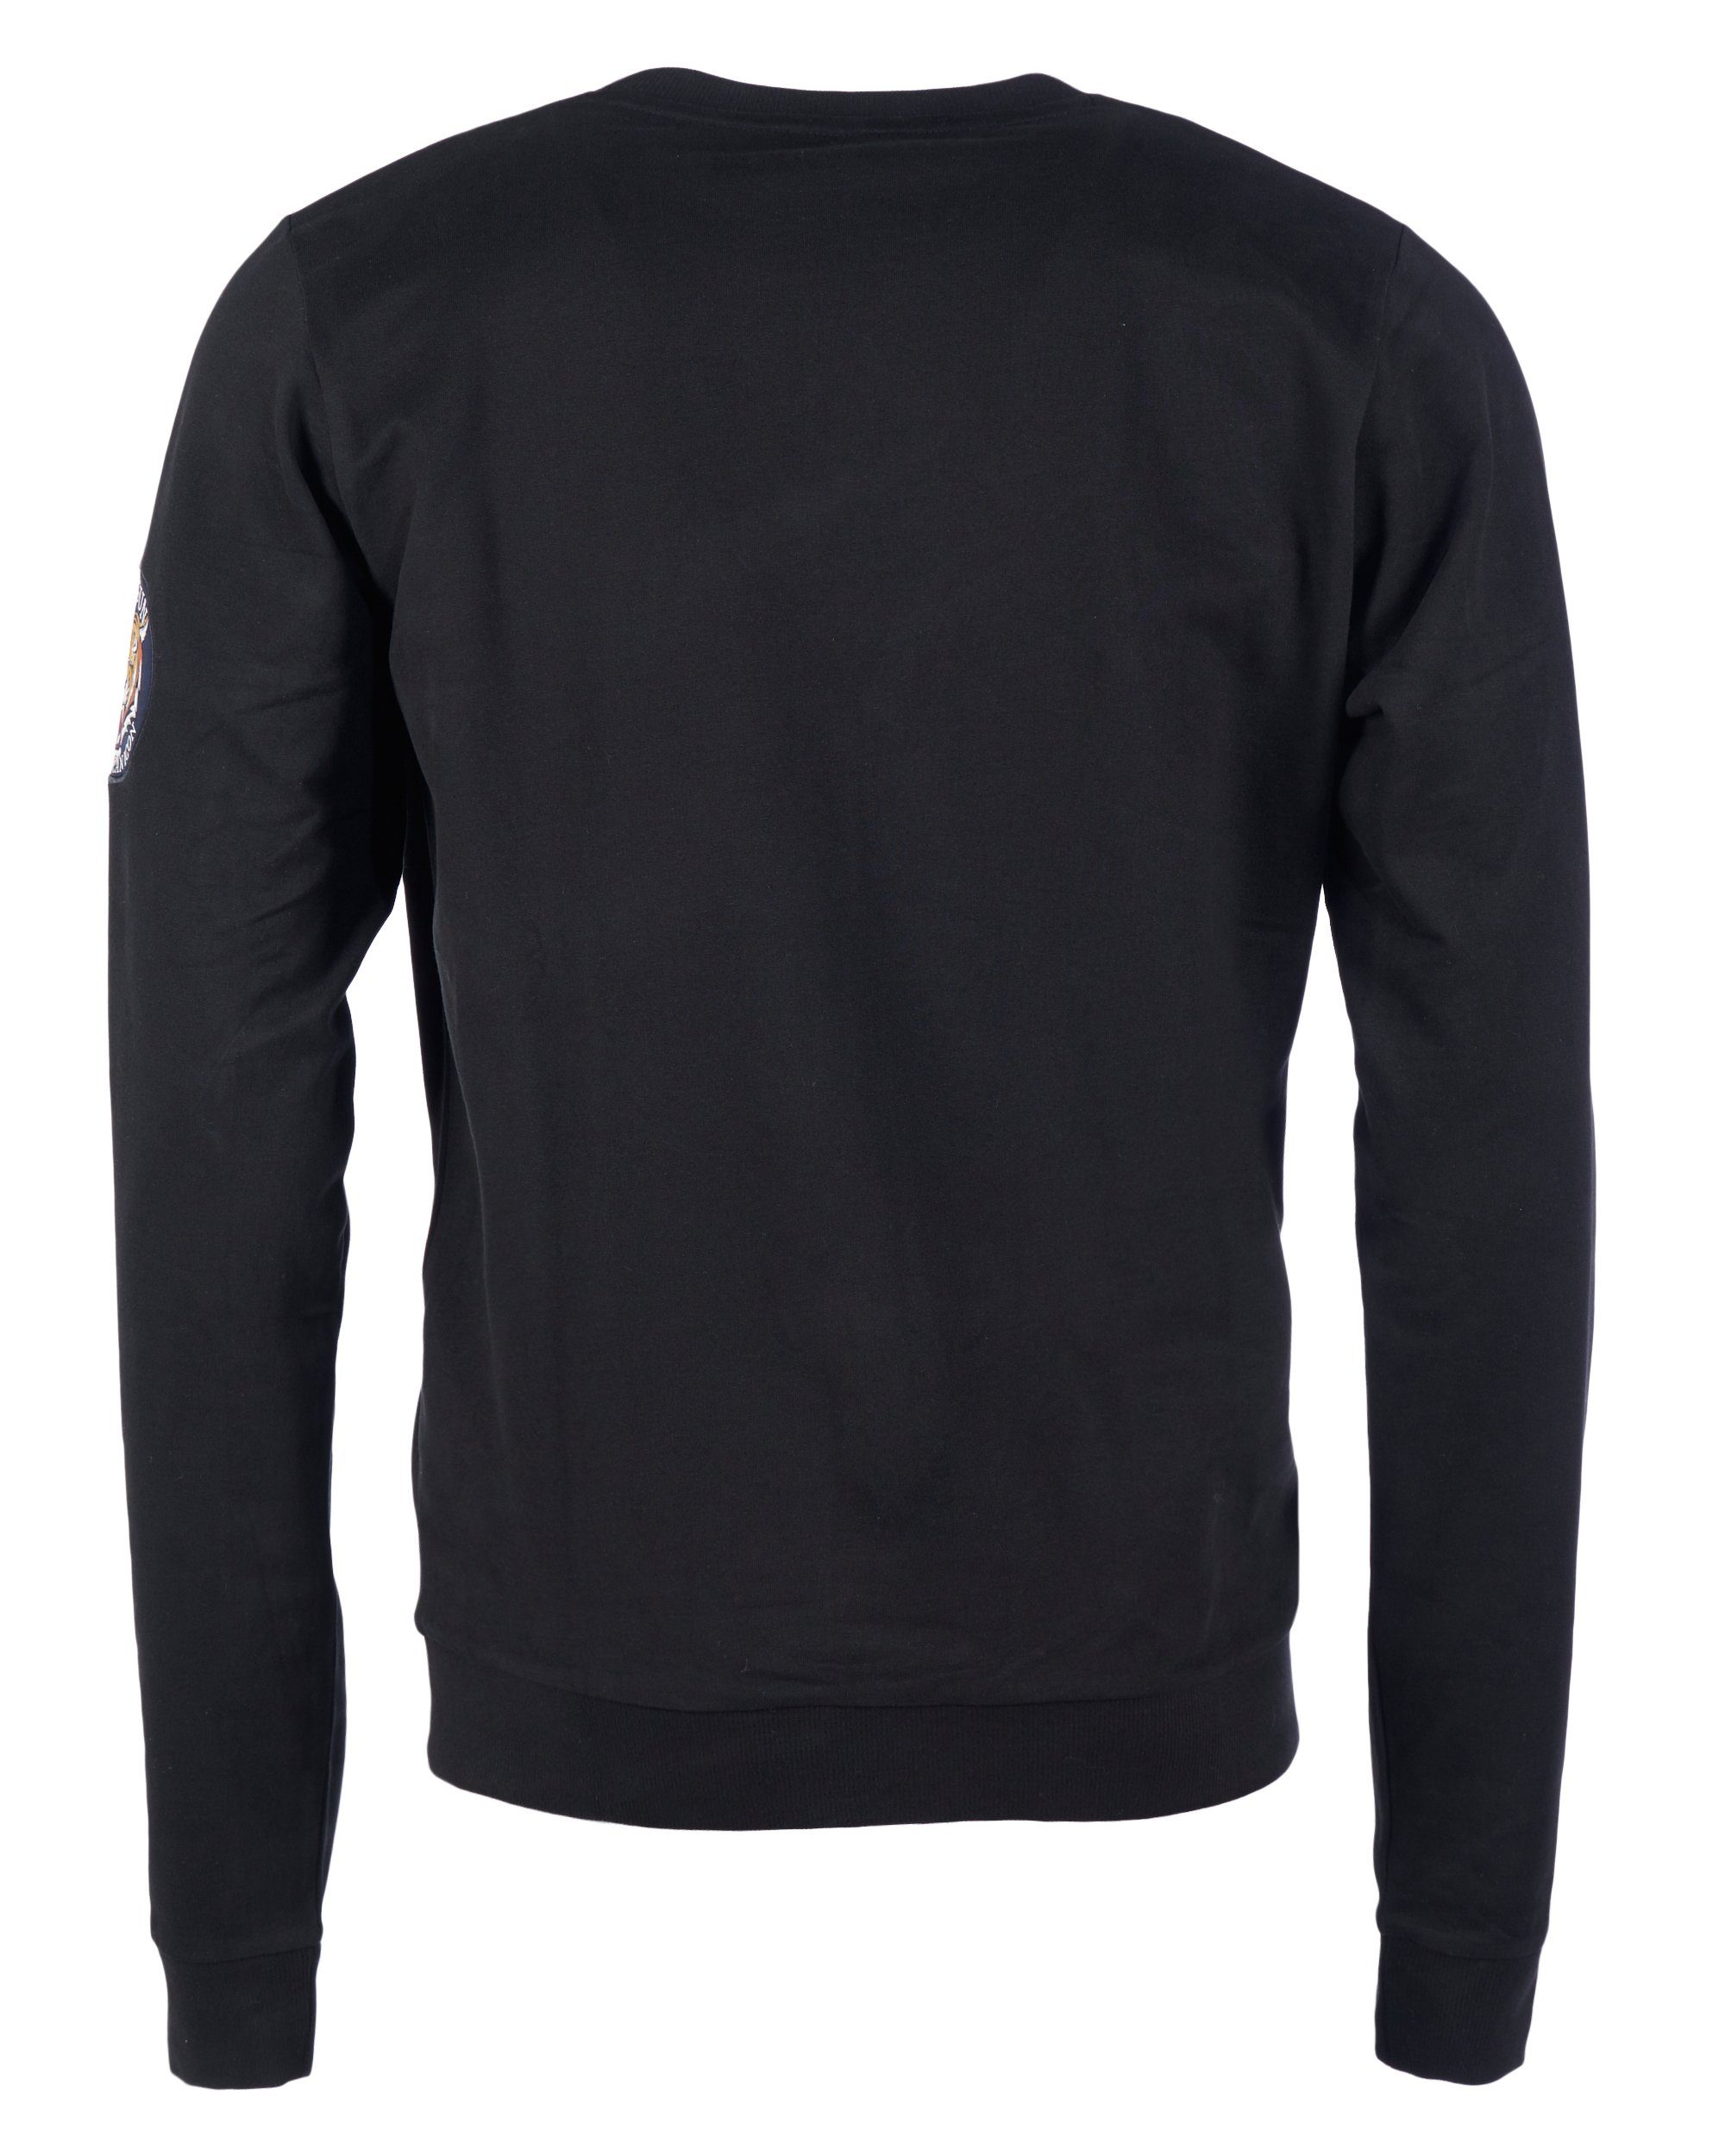 TOP GUN Sweater black TG20213005